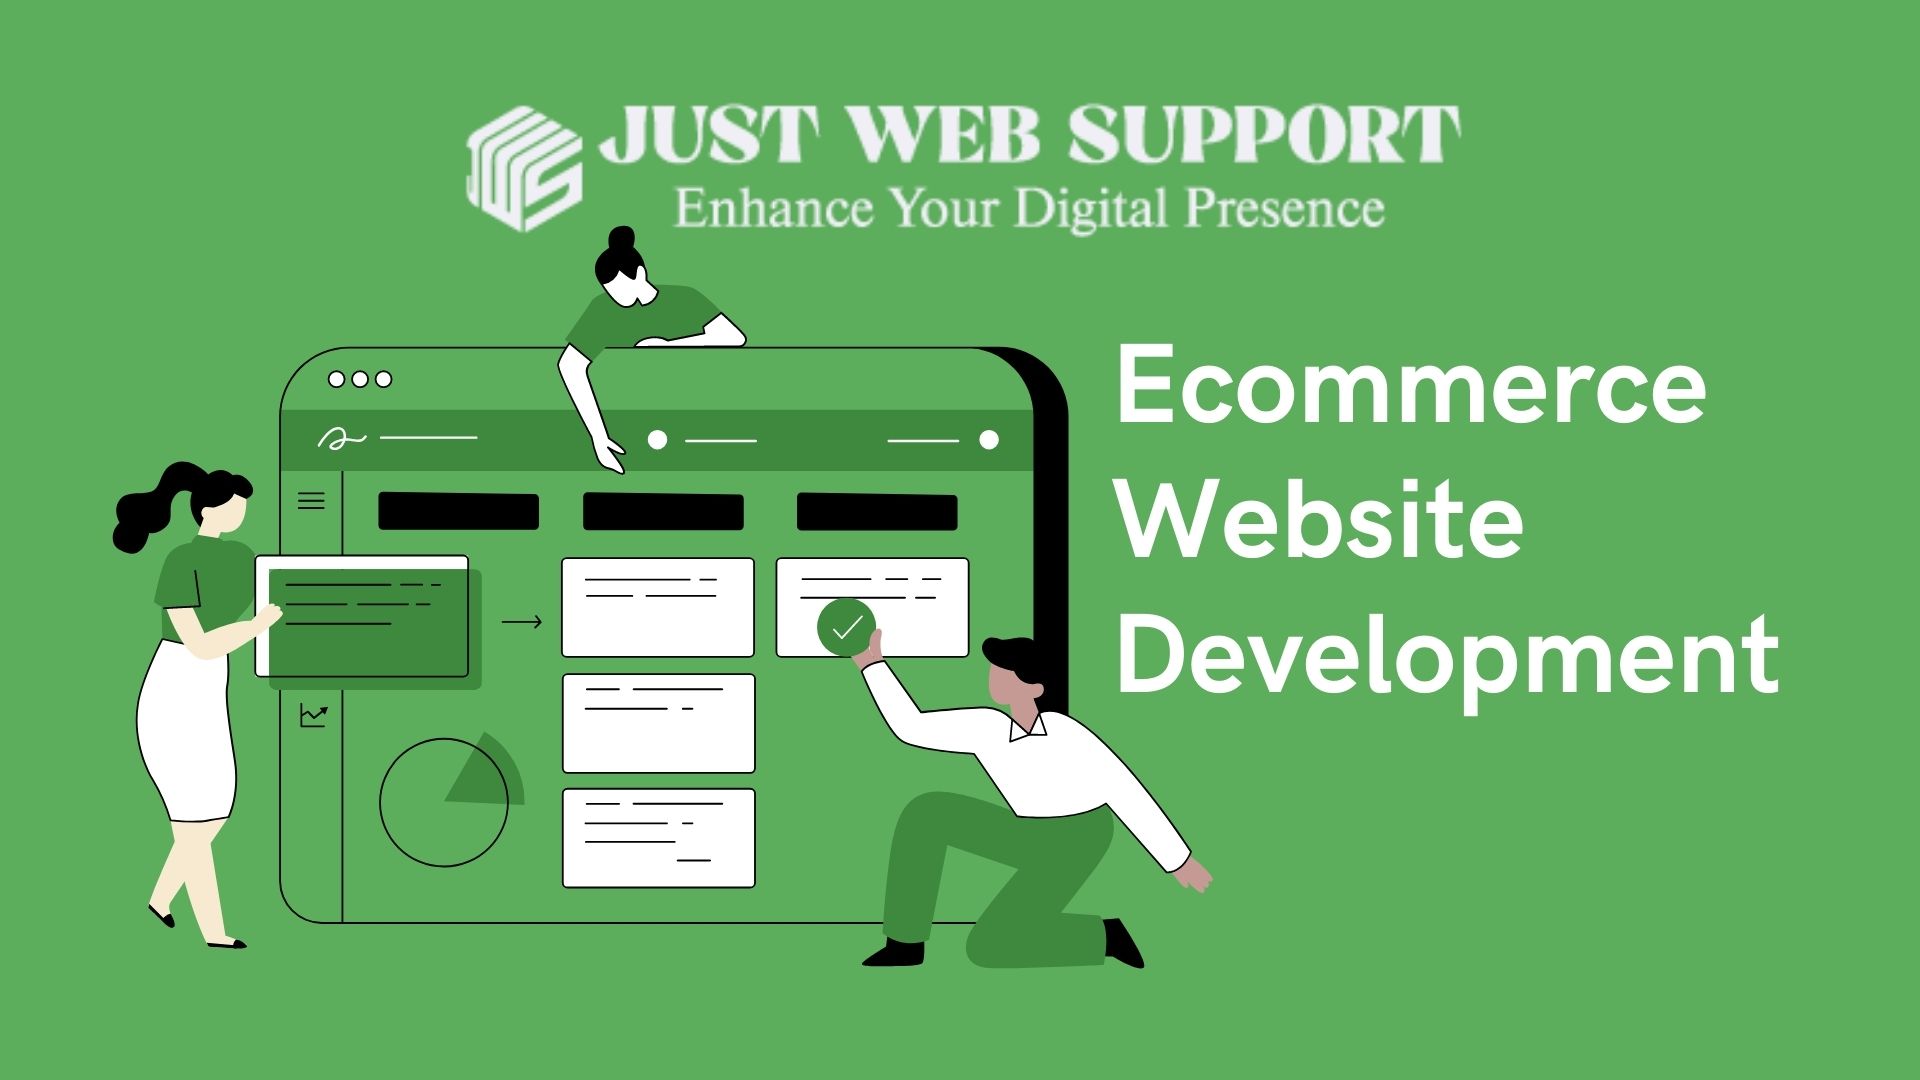 Ecommerce Website Development Just Web Support